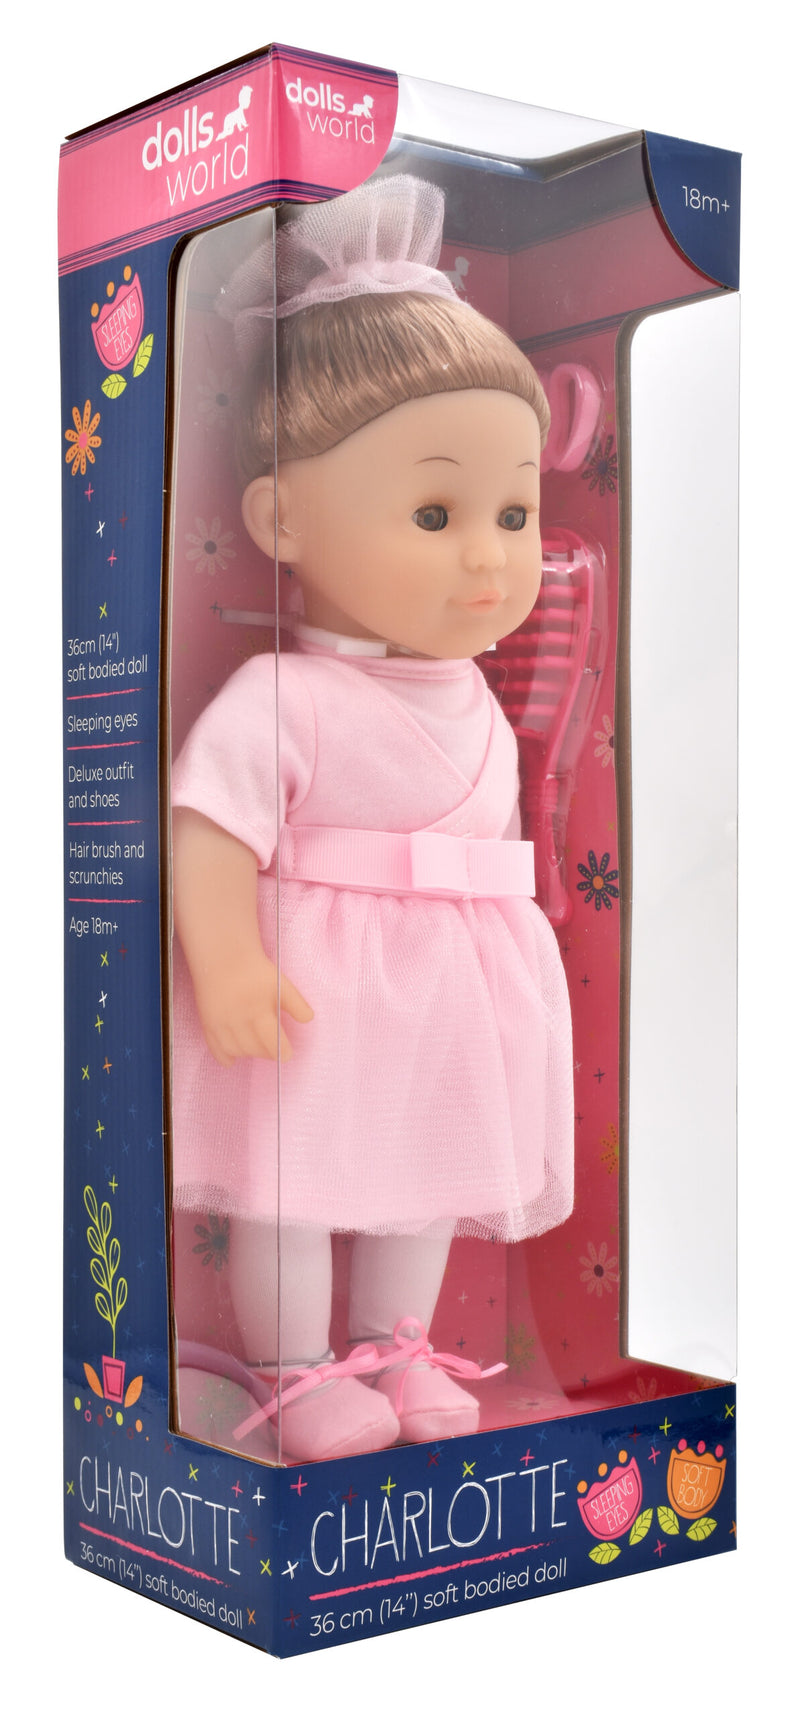 Dollsworld Charlotte Doll With Brunette Upright Bun Hairstyle 36cm (14") (7769895141531)